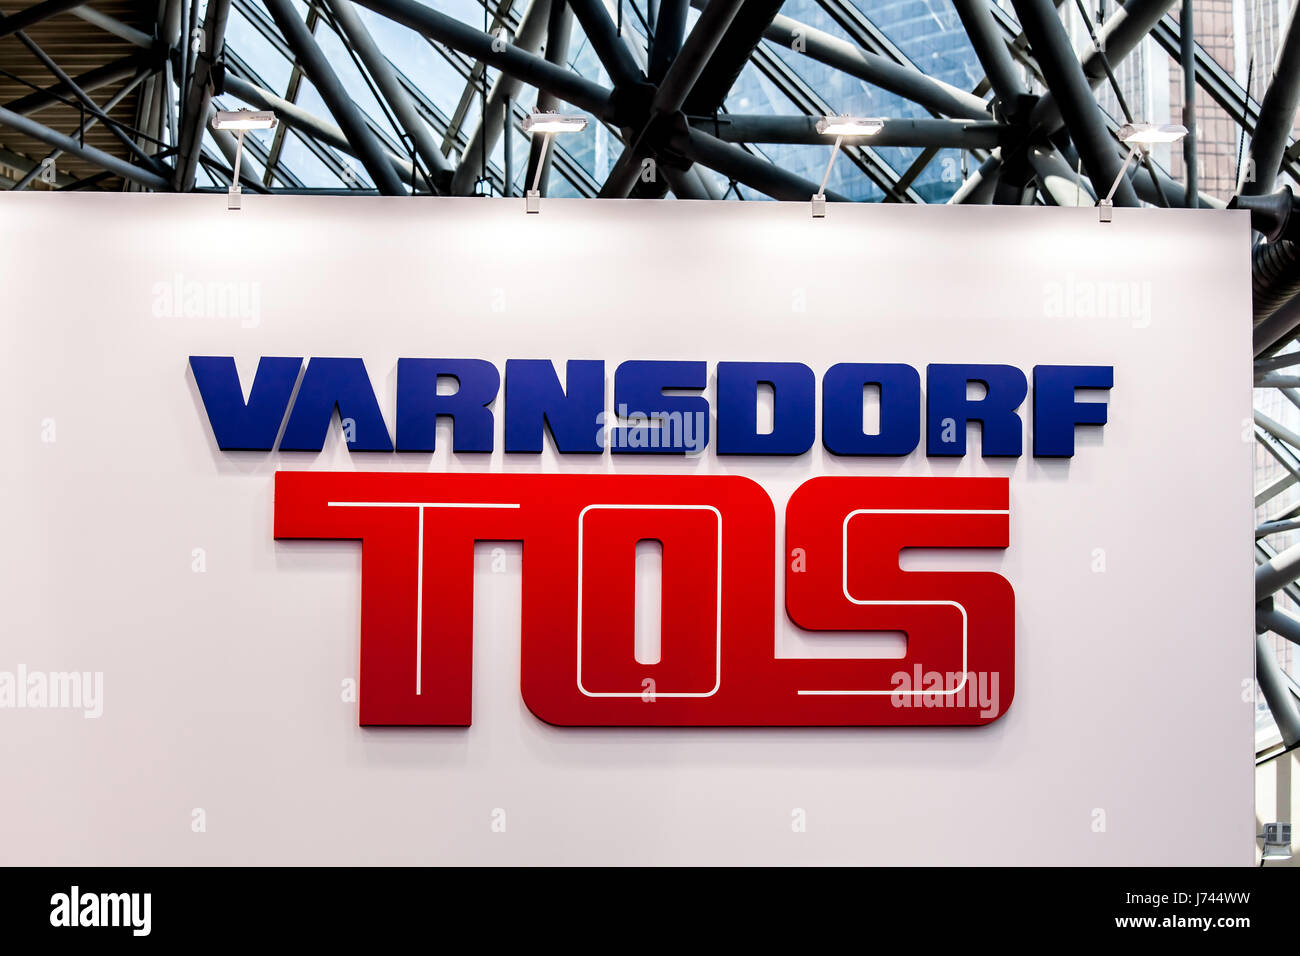 Tos Varnsdorf logo aziendale sulla parete. Foto Stock